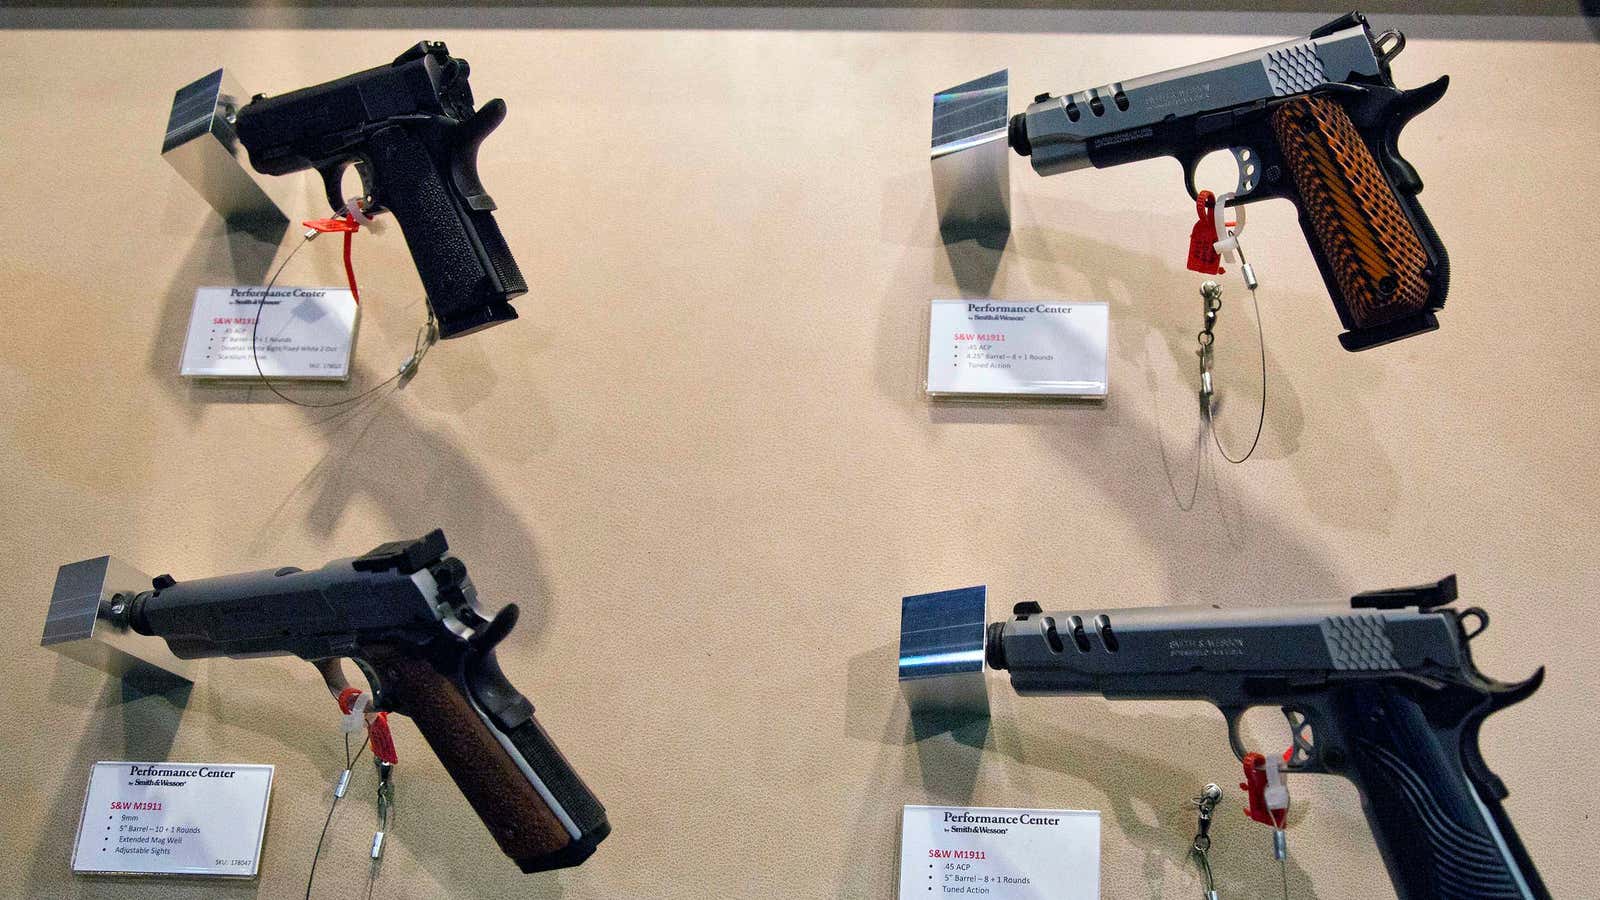 Despite divestitures in gun makers, their stocks are rising.